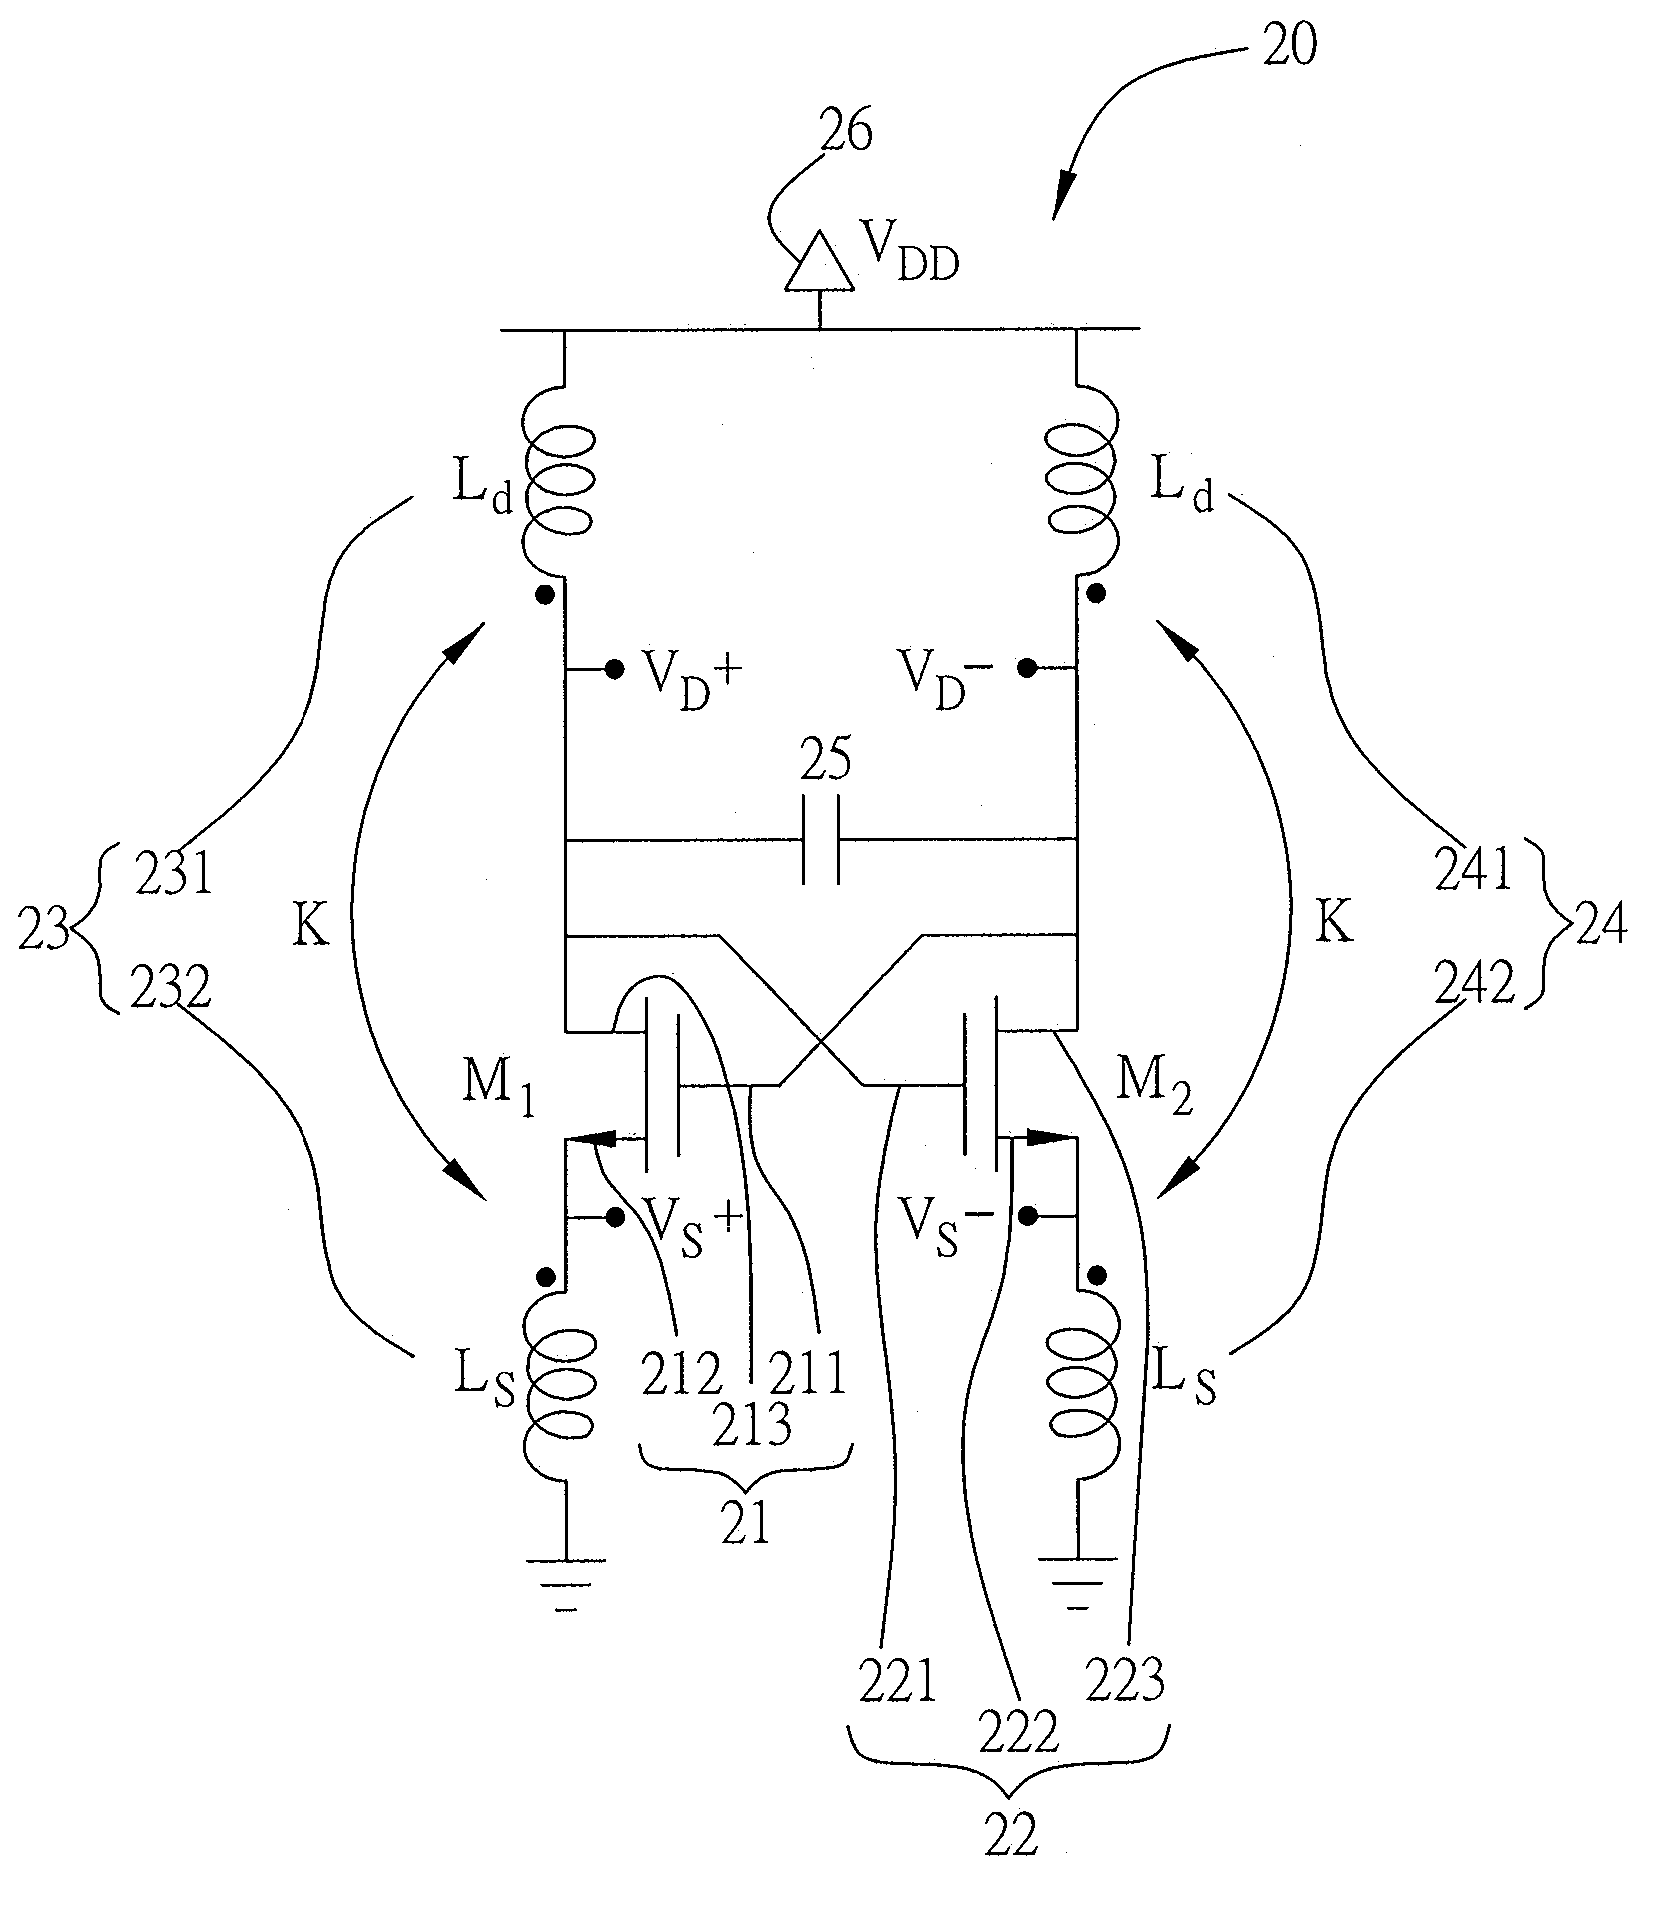 Transistor voltage-controlled oscillator